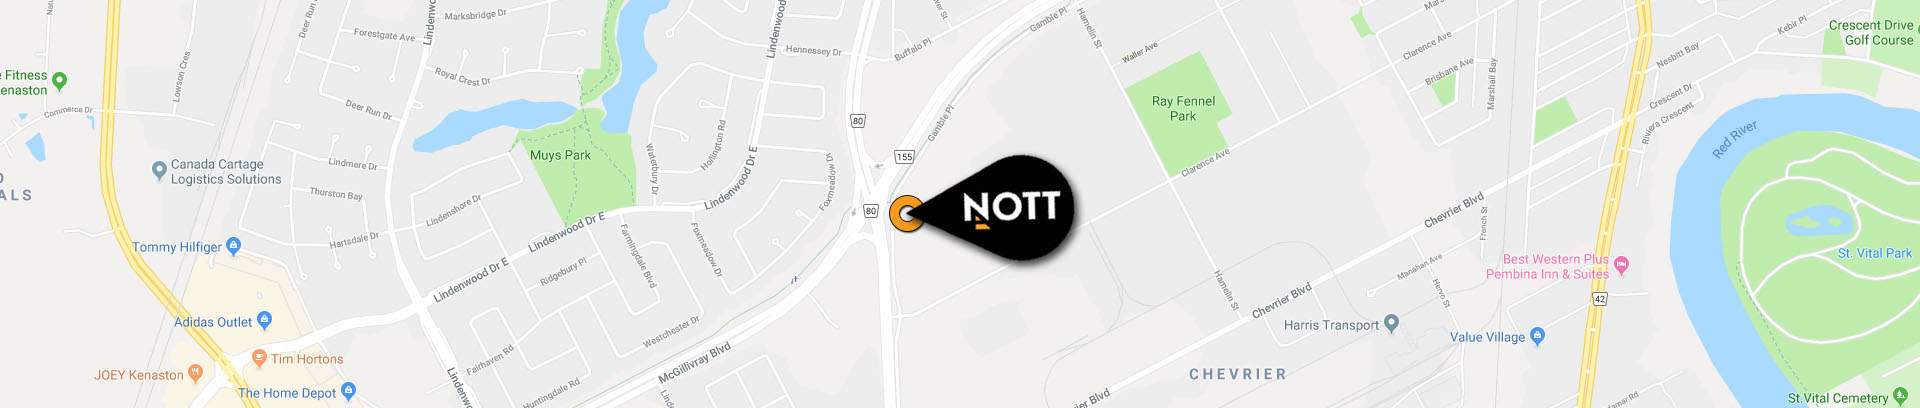 Mott Autocorp location map